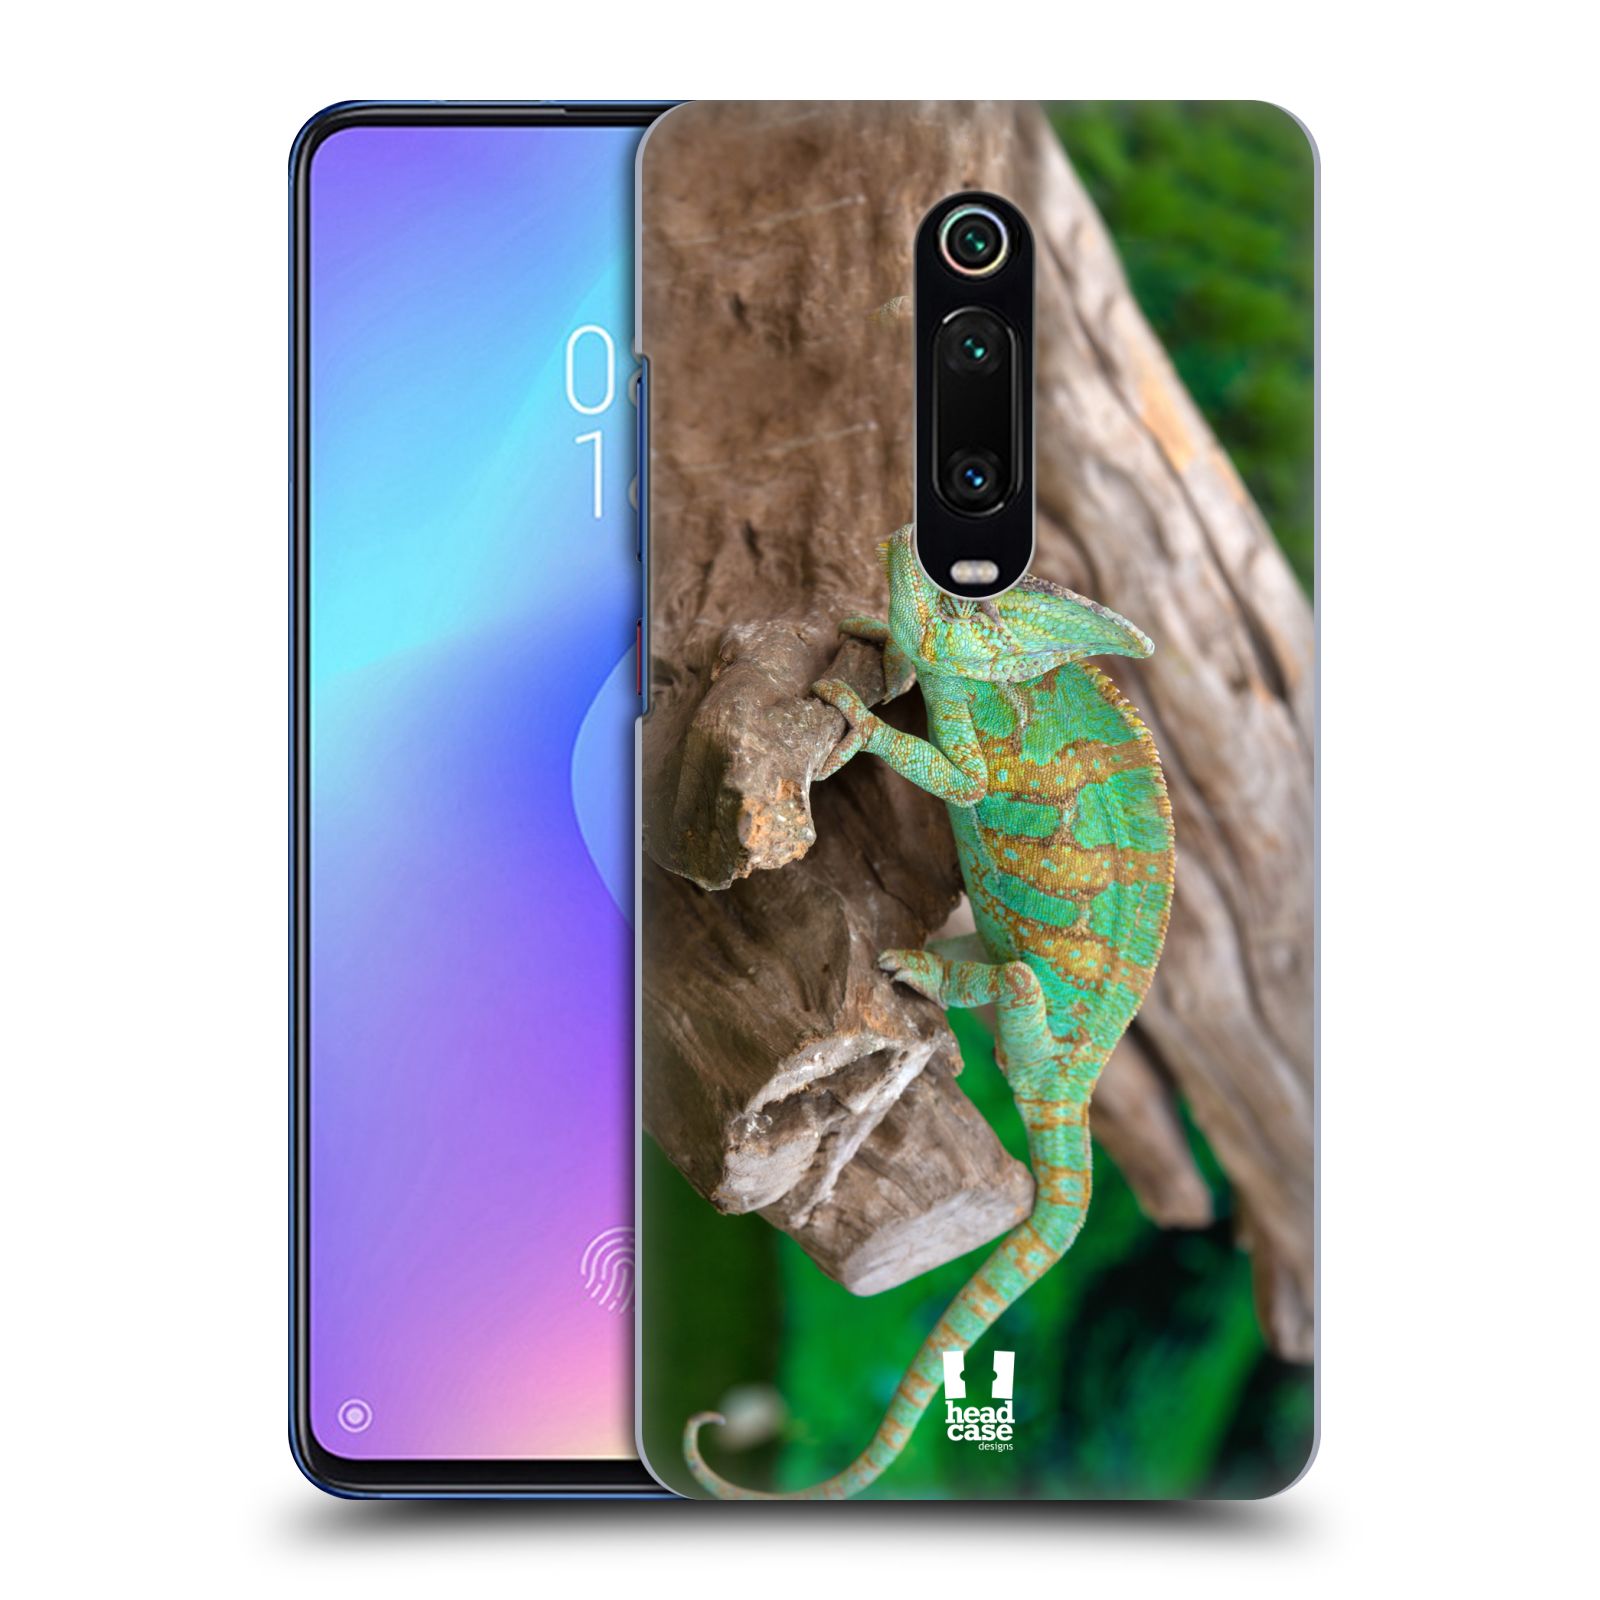 Pouzdro na mobil Xiaomi Mi 9T PRO - HEAD CASE - vzor slavná zvířata foto chameleon